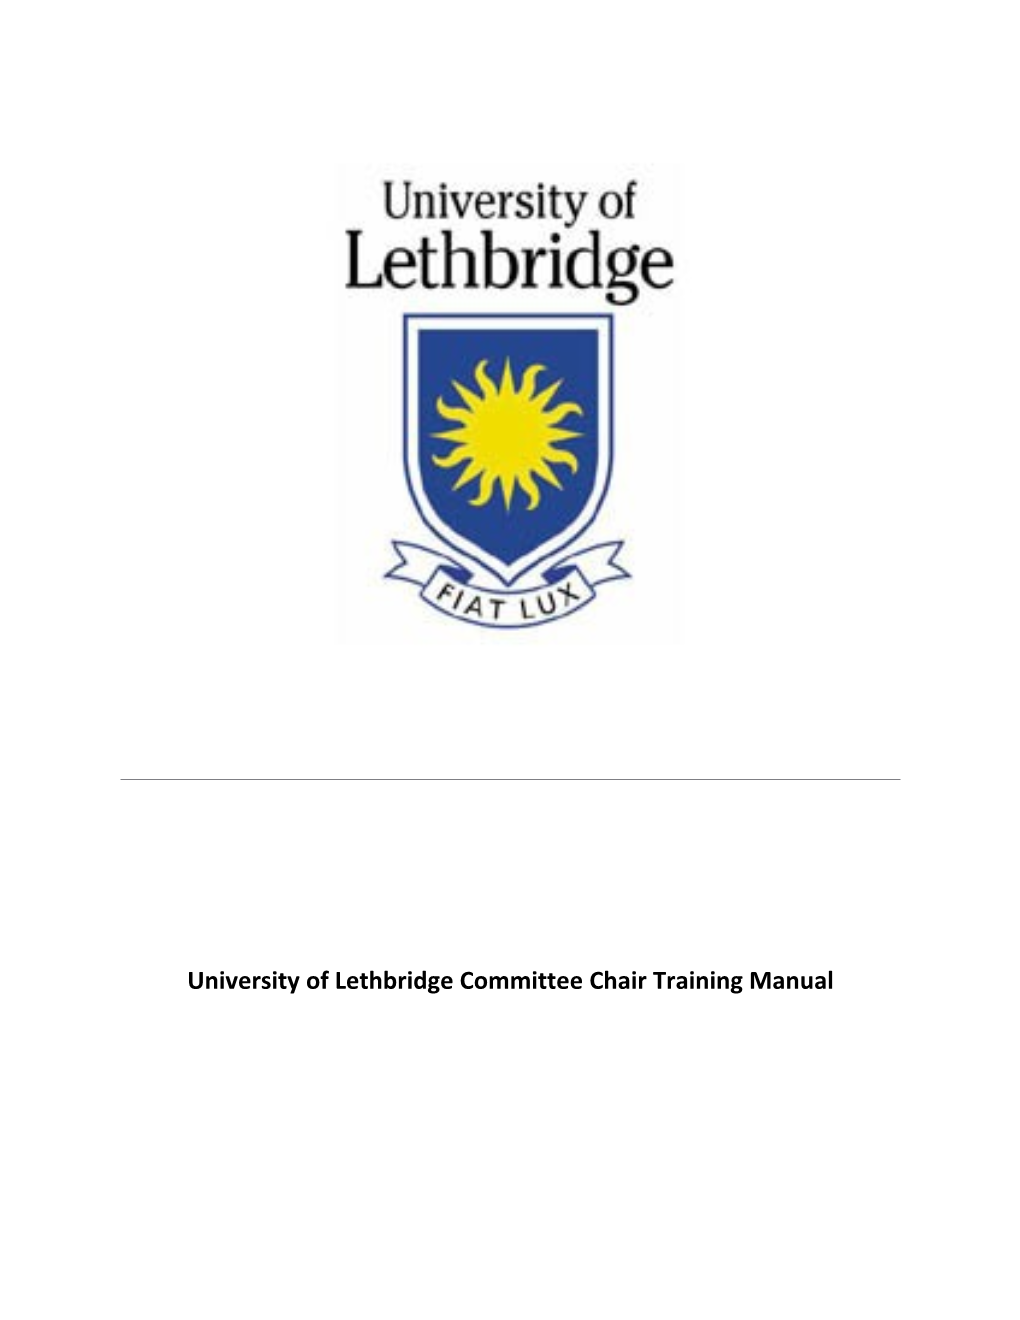 University of Lethbridge Committee Chair Training Manual